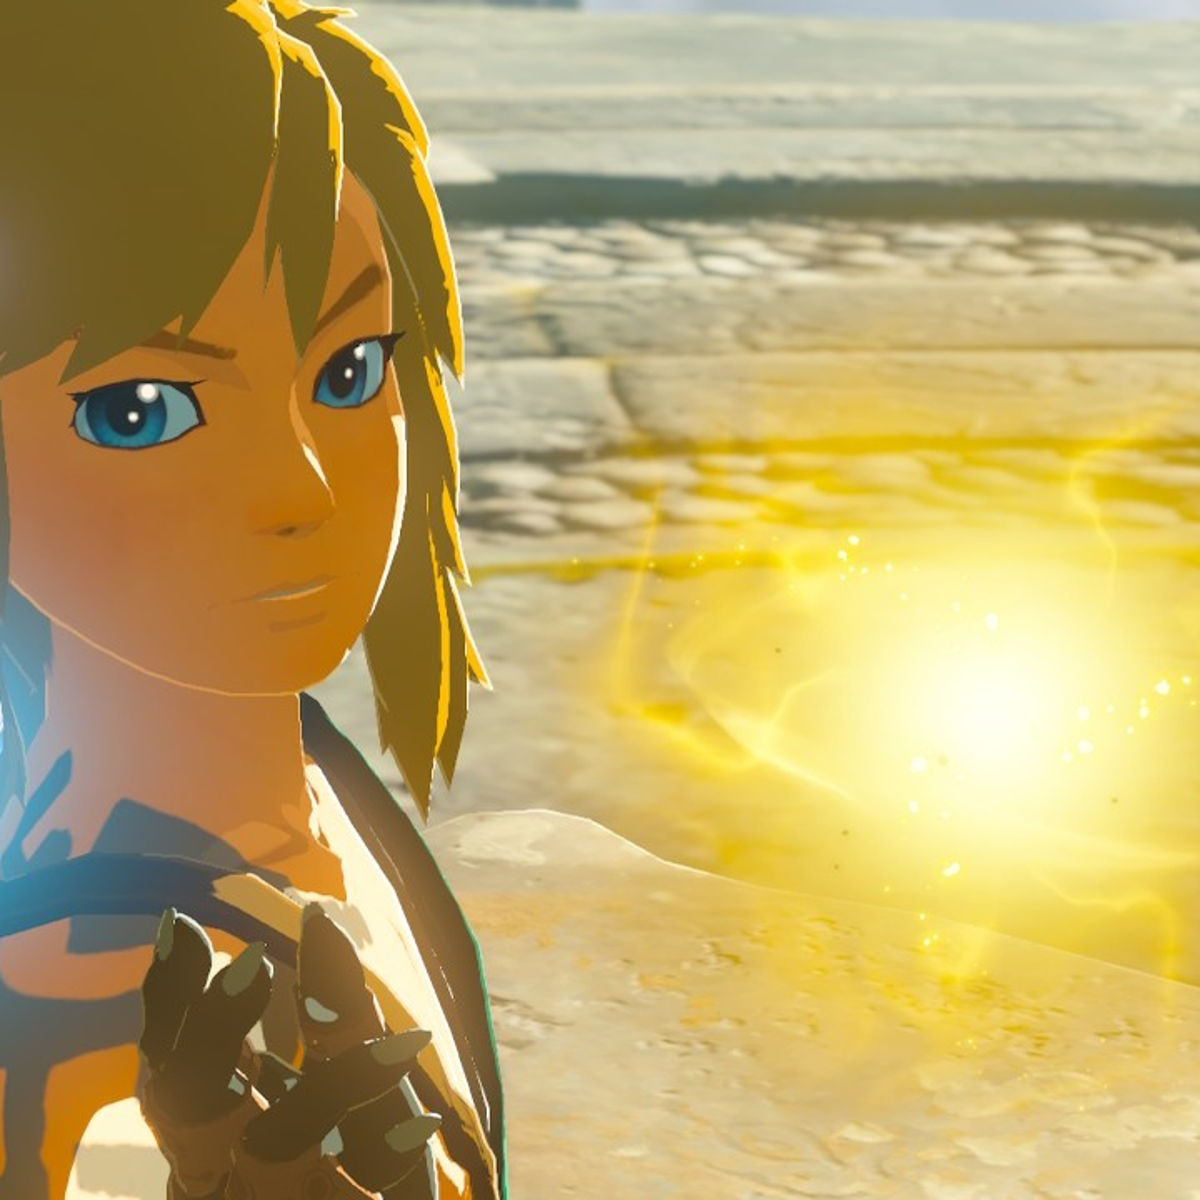 New Zelda: Tears of the Kingdom item duplication glitch discovered - Eurogamer.net (Picture 1)